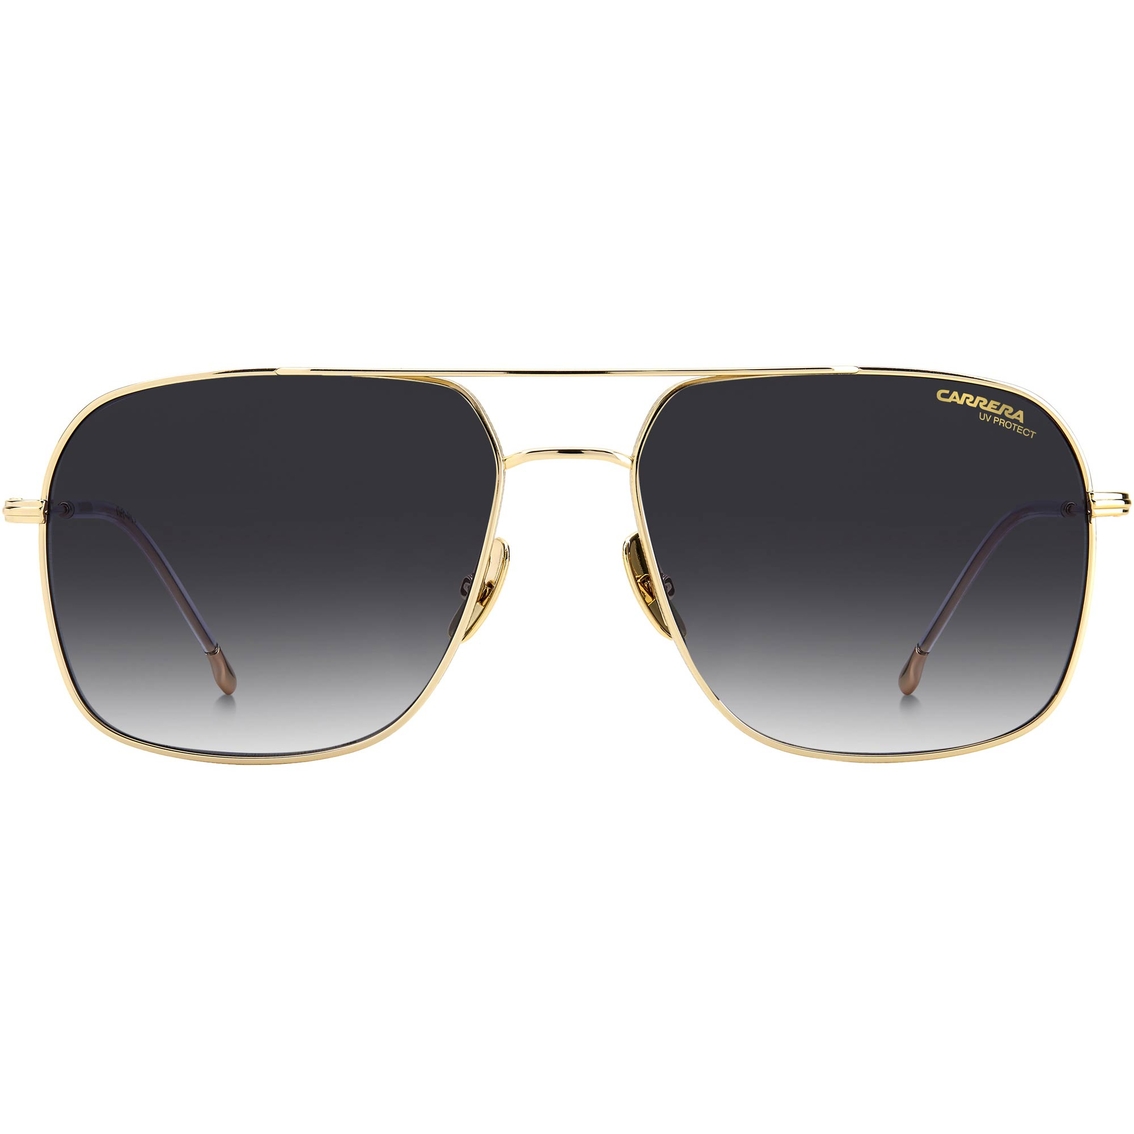 Carrera Navigator Sunglasses | Sunglasses | Clothing & Accessories ...